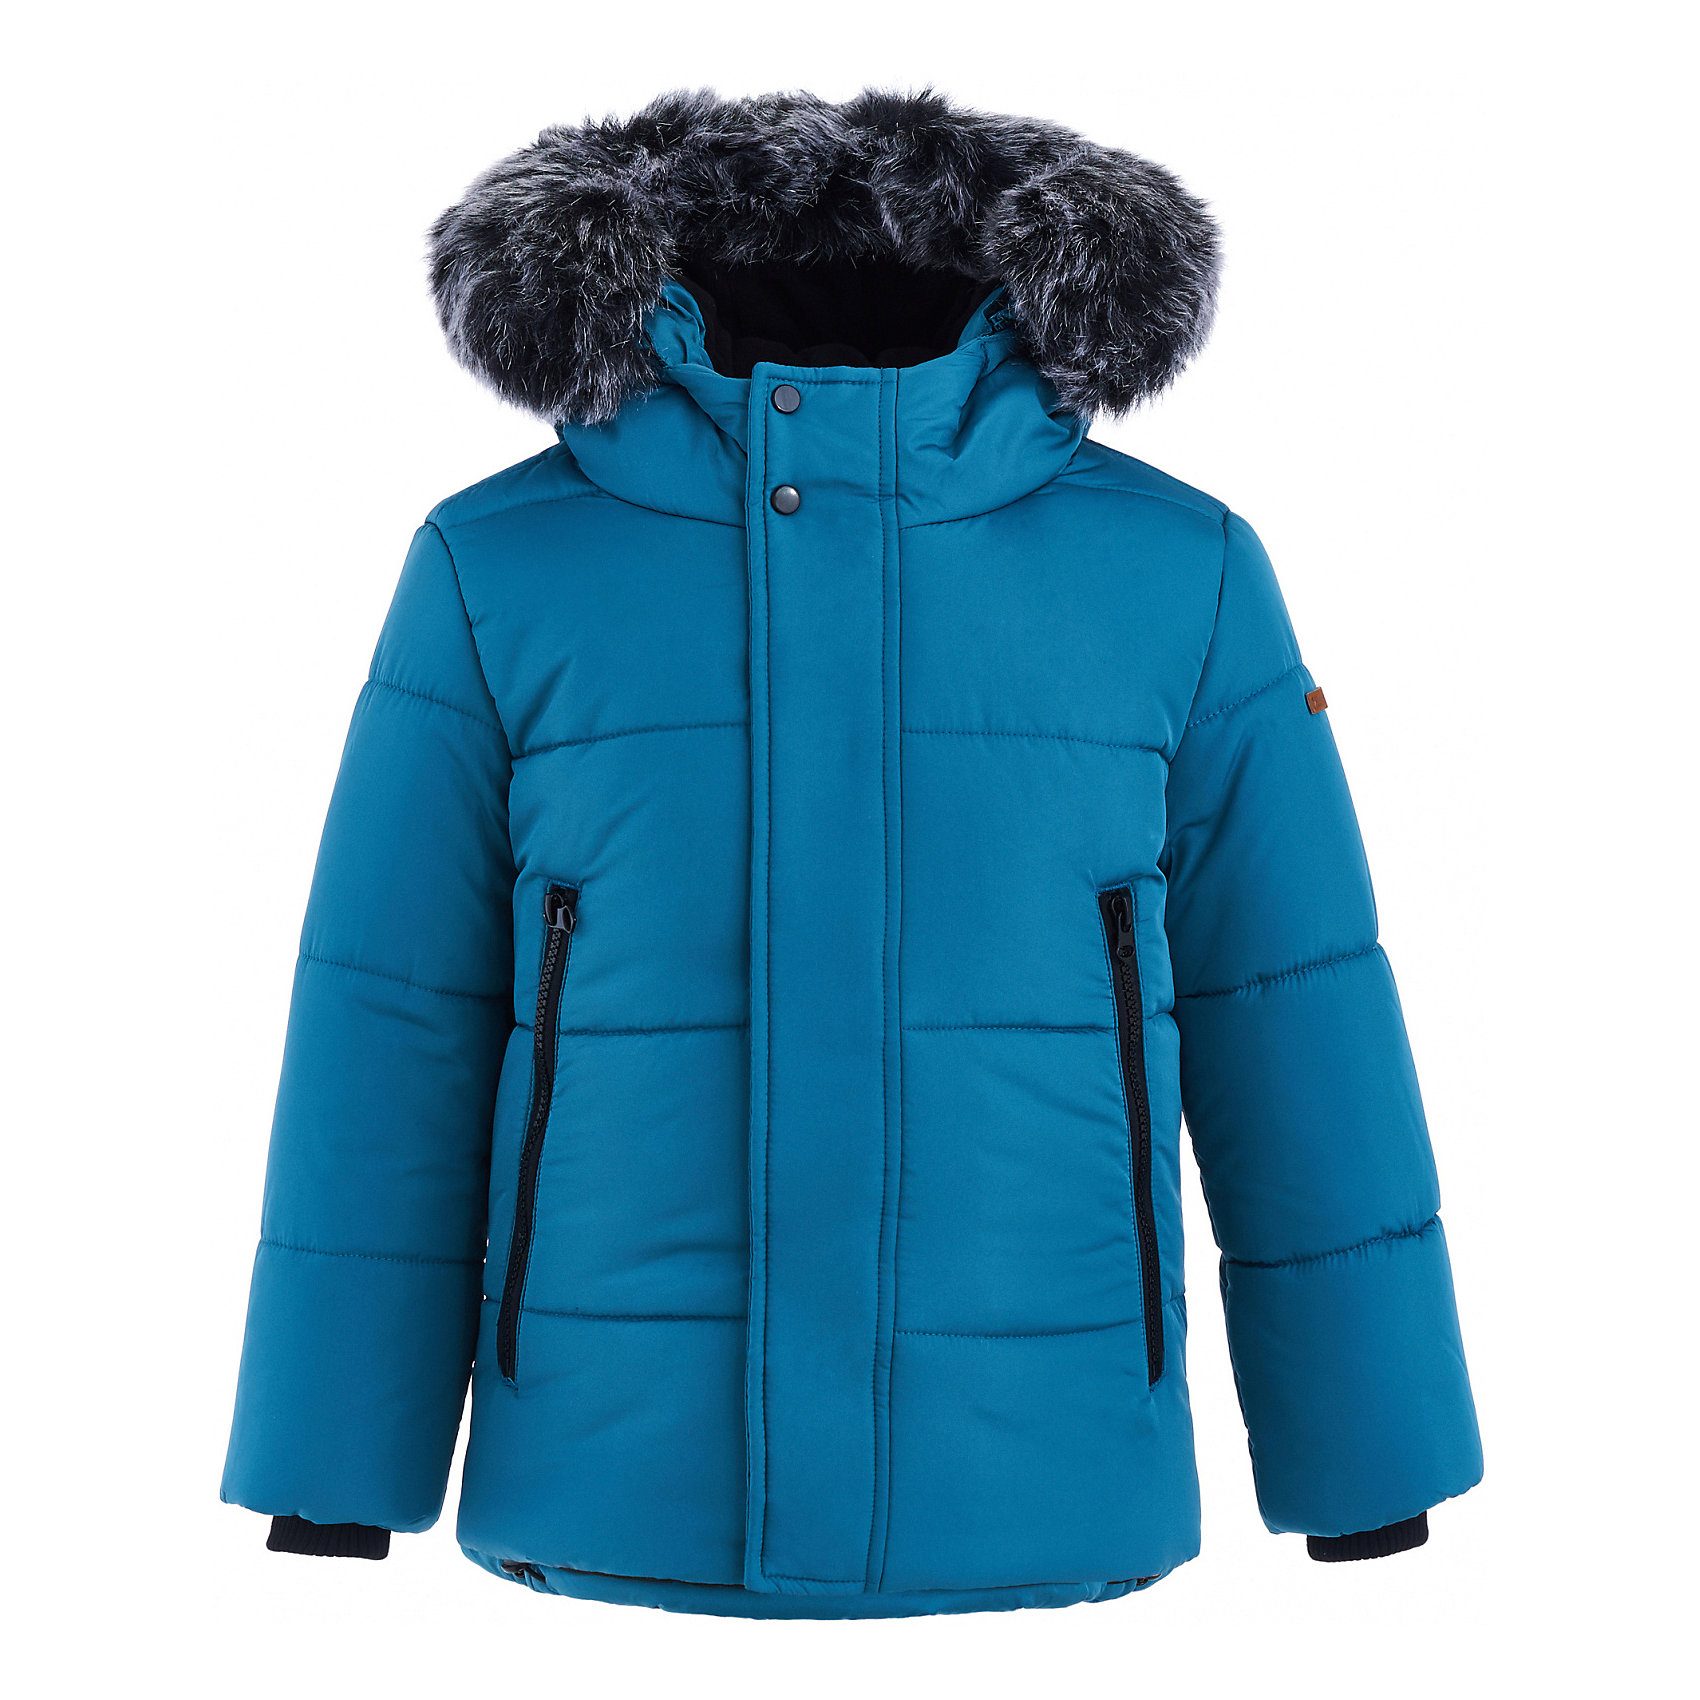 Утепленная куртка для мальчика. Куртка Баттон Блю для мальчика. Баттон Блю зимняя куртка для мальчика. Button Blue куртка для мальчика зимняя. Button Blue зимняя куртка для мальчика 116.